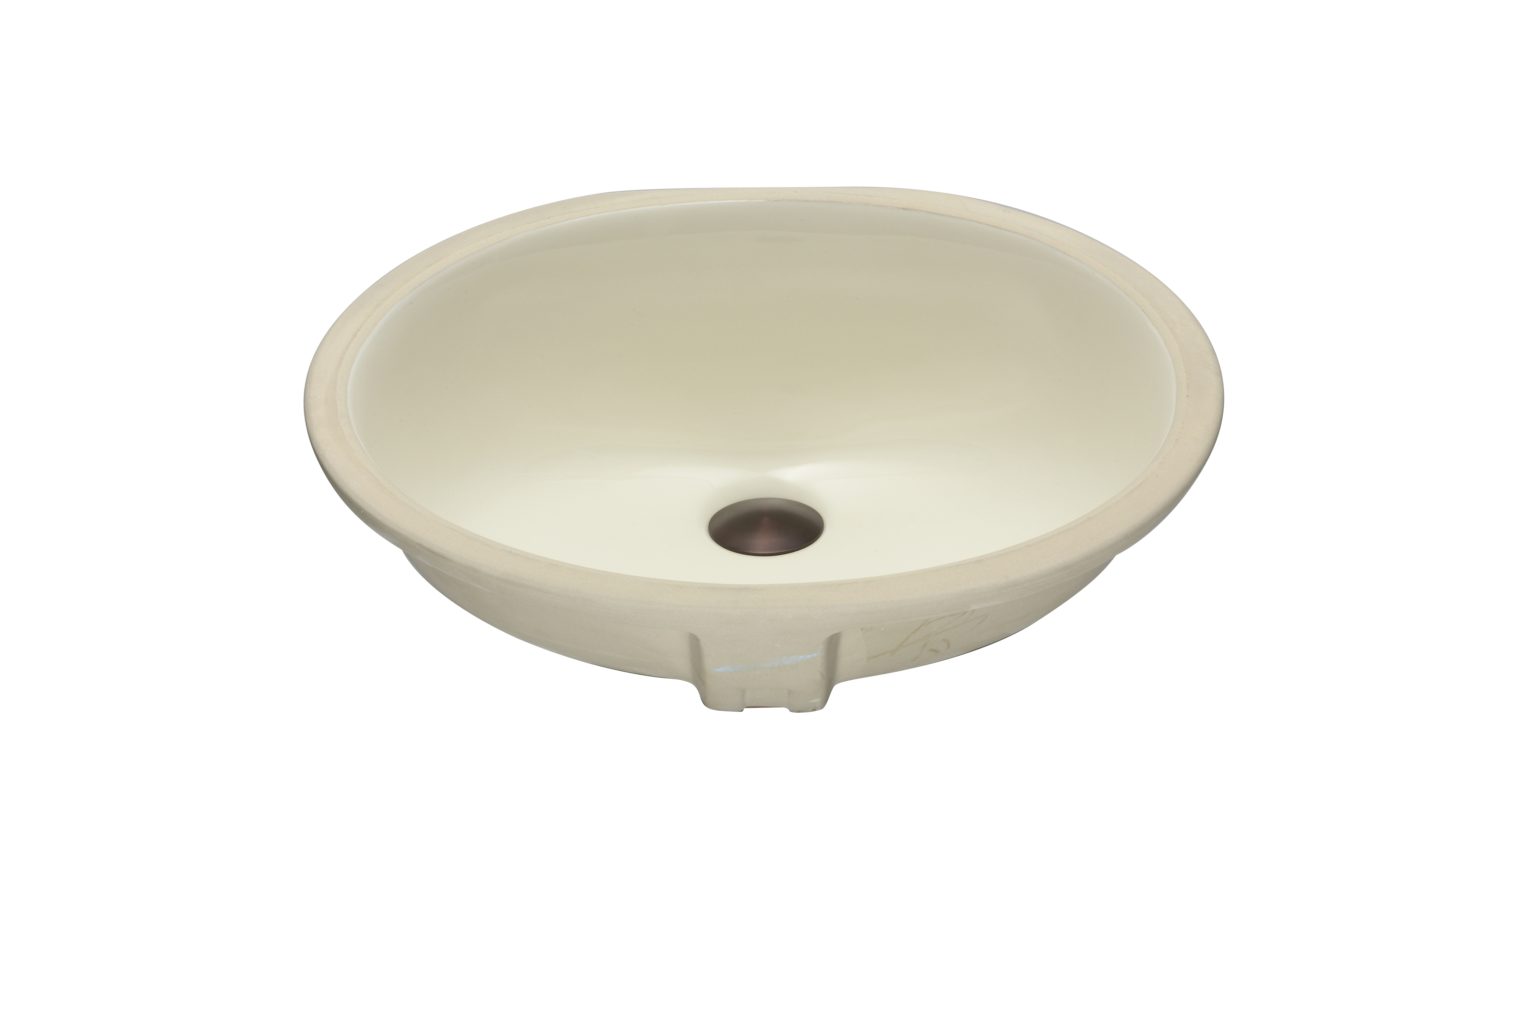 modern vitreous china oval vessel bathroom sink